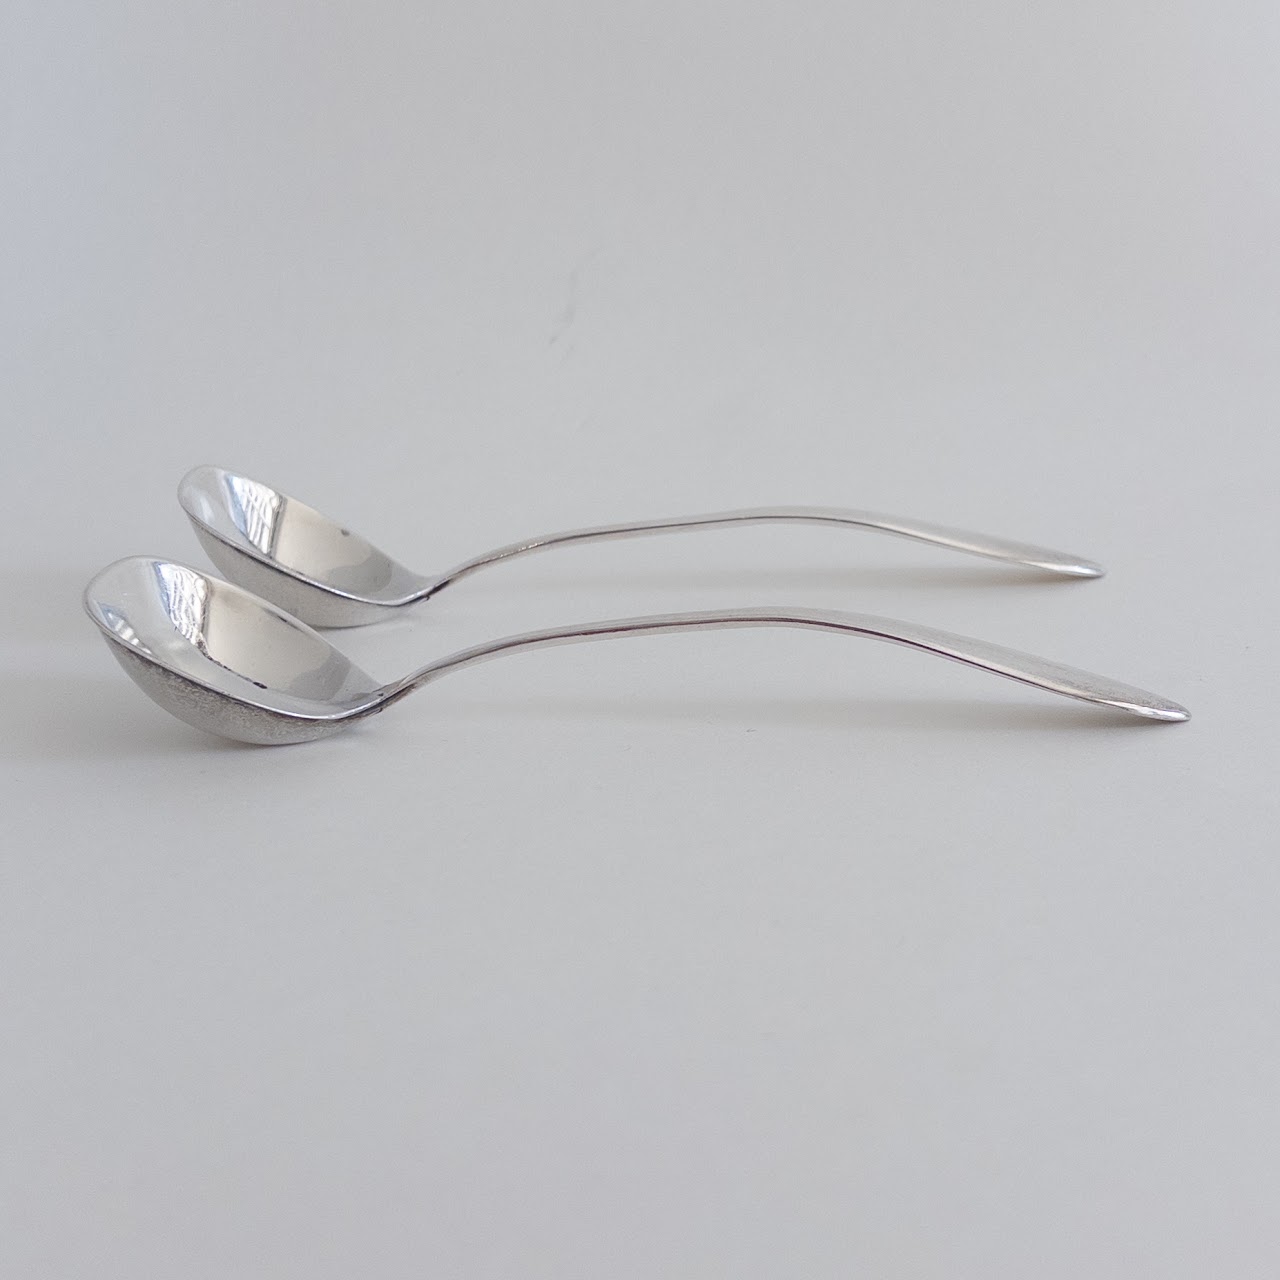 Sterling Silver Sugar Shovel Spoon Pair